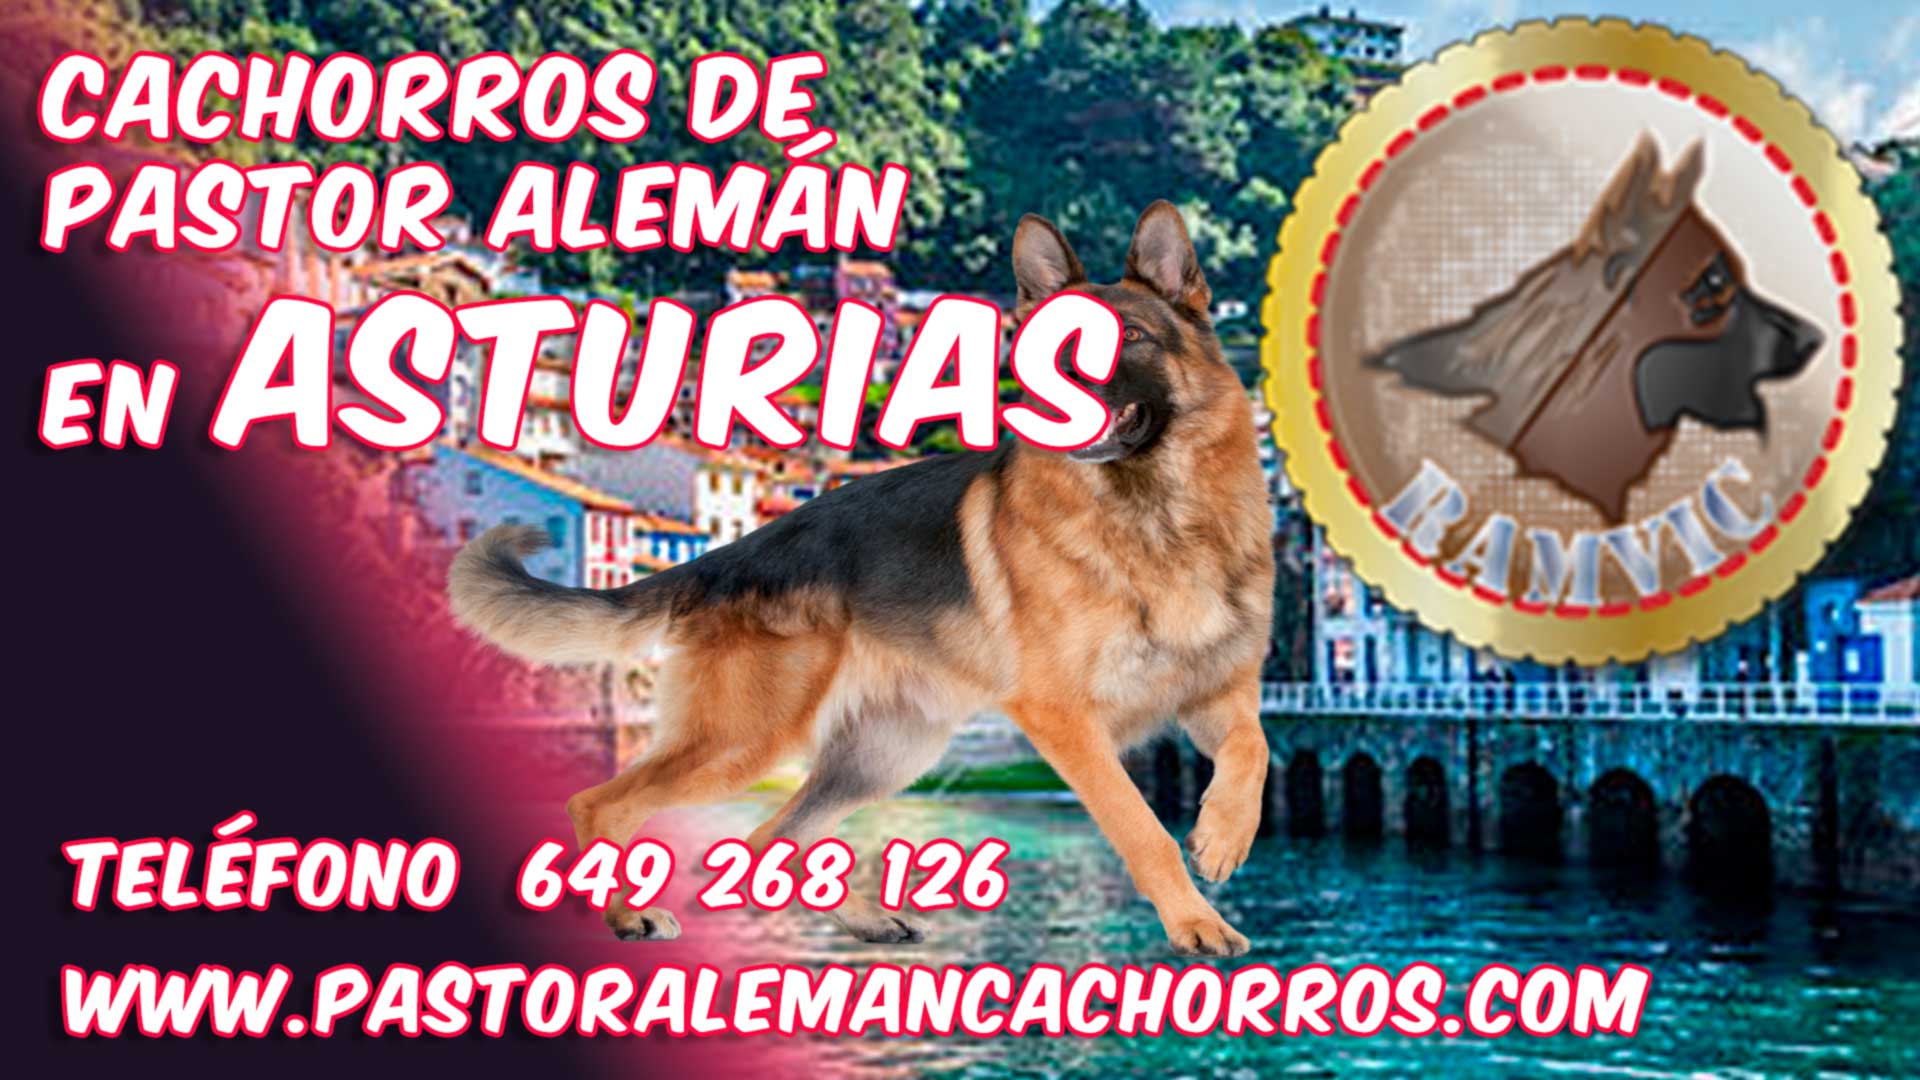 Comprar cachorro pastor aleman ASturias